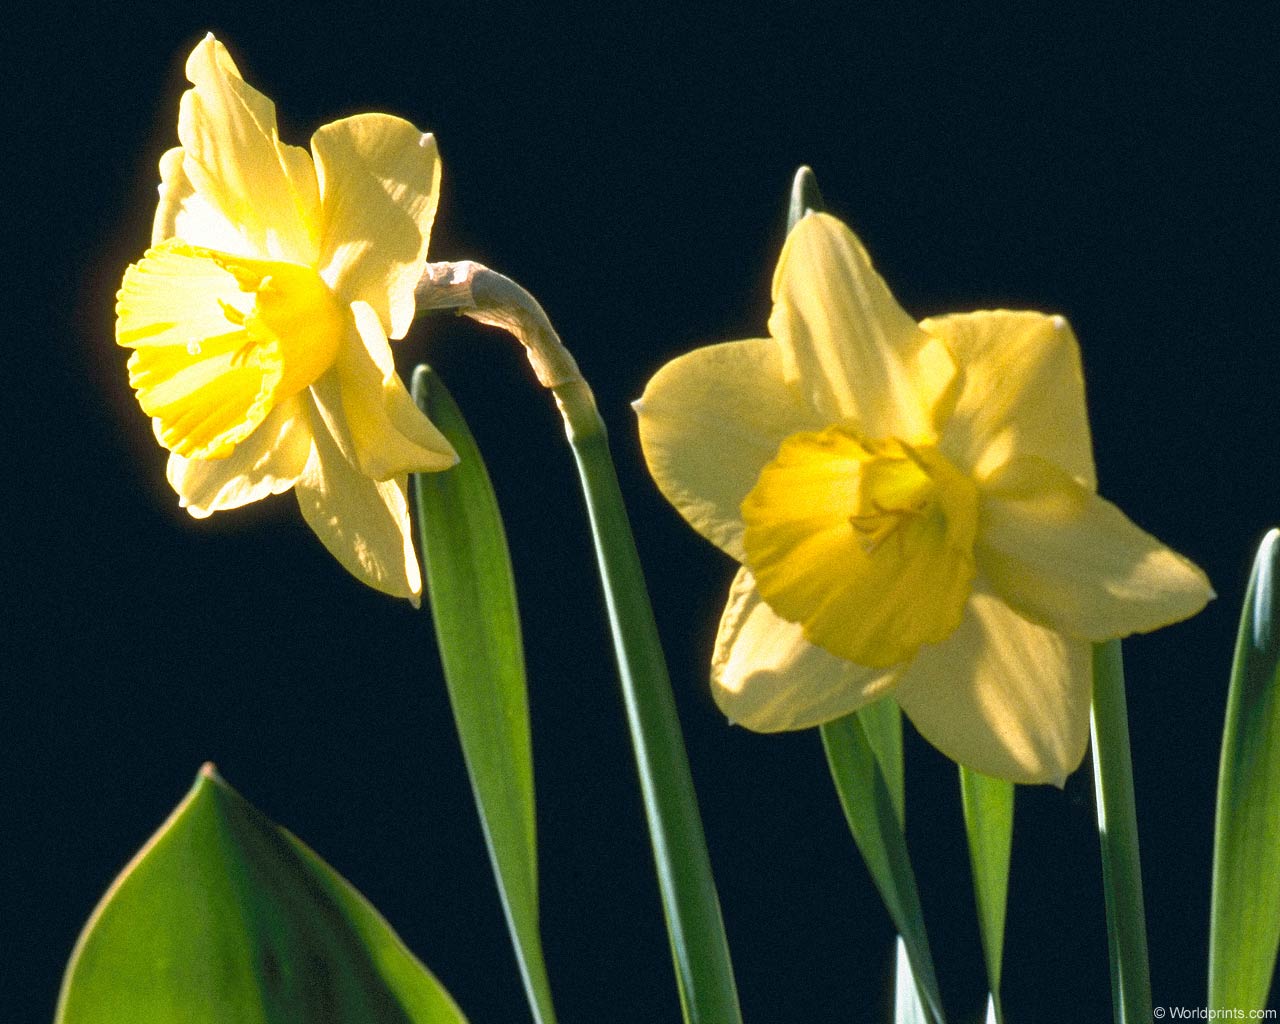 Daffodil flower wallpaper|Free download Daffodil flower wallpaper ...